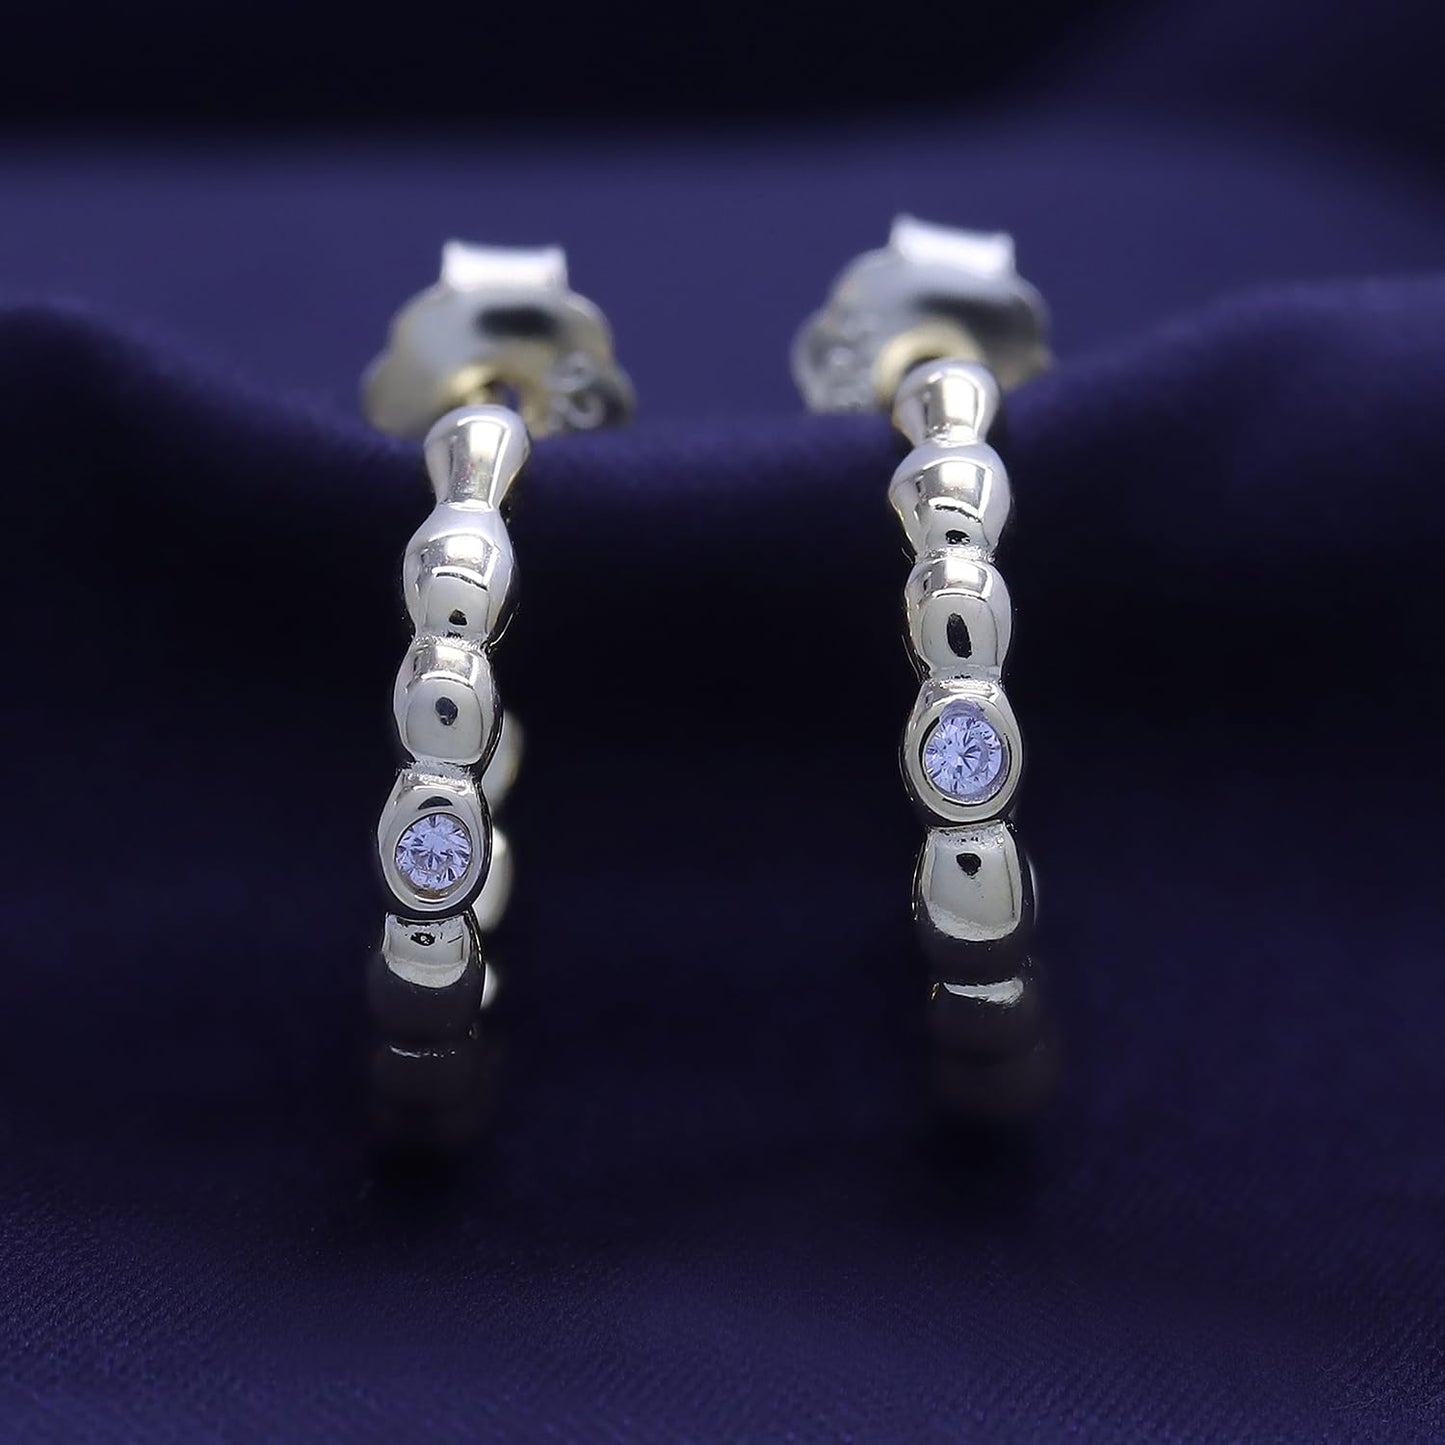 Beaded Huggie Hoop Earrings For Women Round Sparkling White Cubic Zirconia C-Shaped Dainty Hoop Earrings In 14K Gold Over Sterling Silver Jewelry Gift for Women